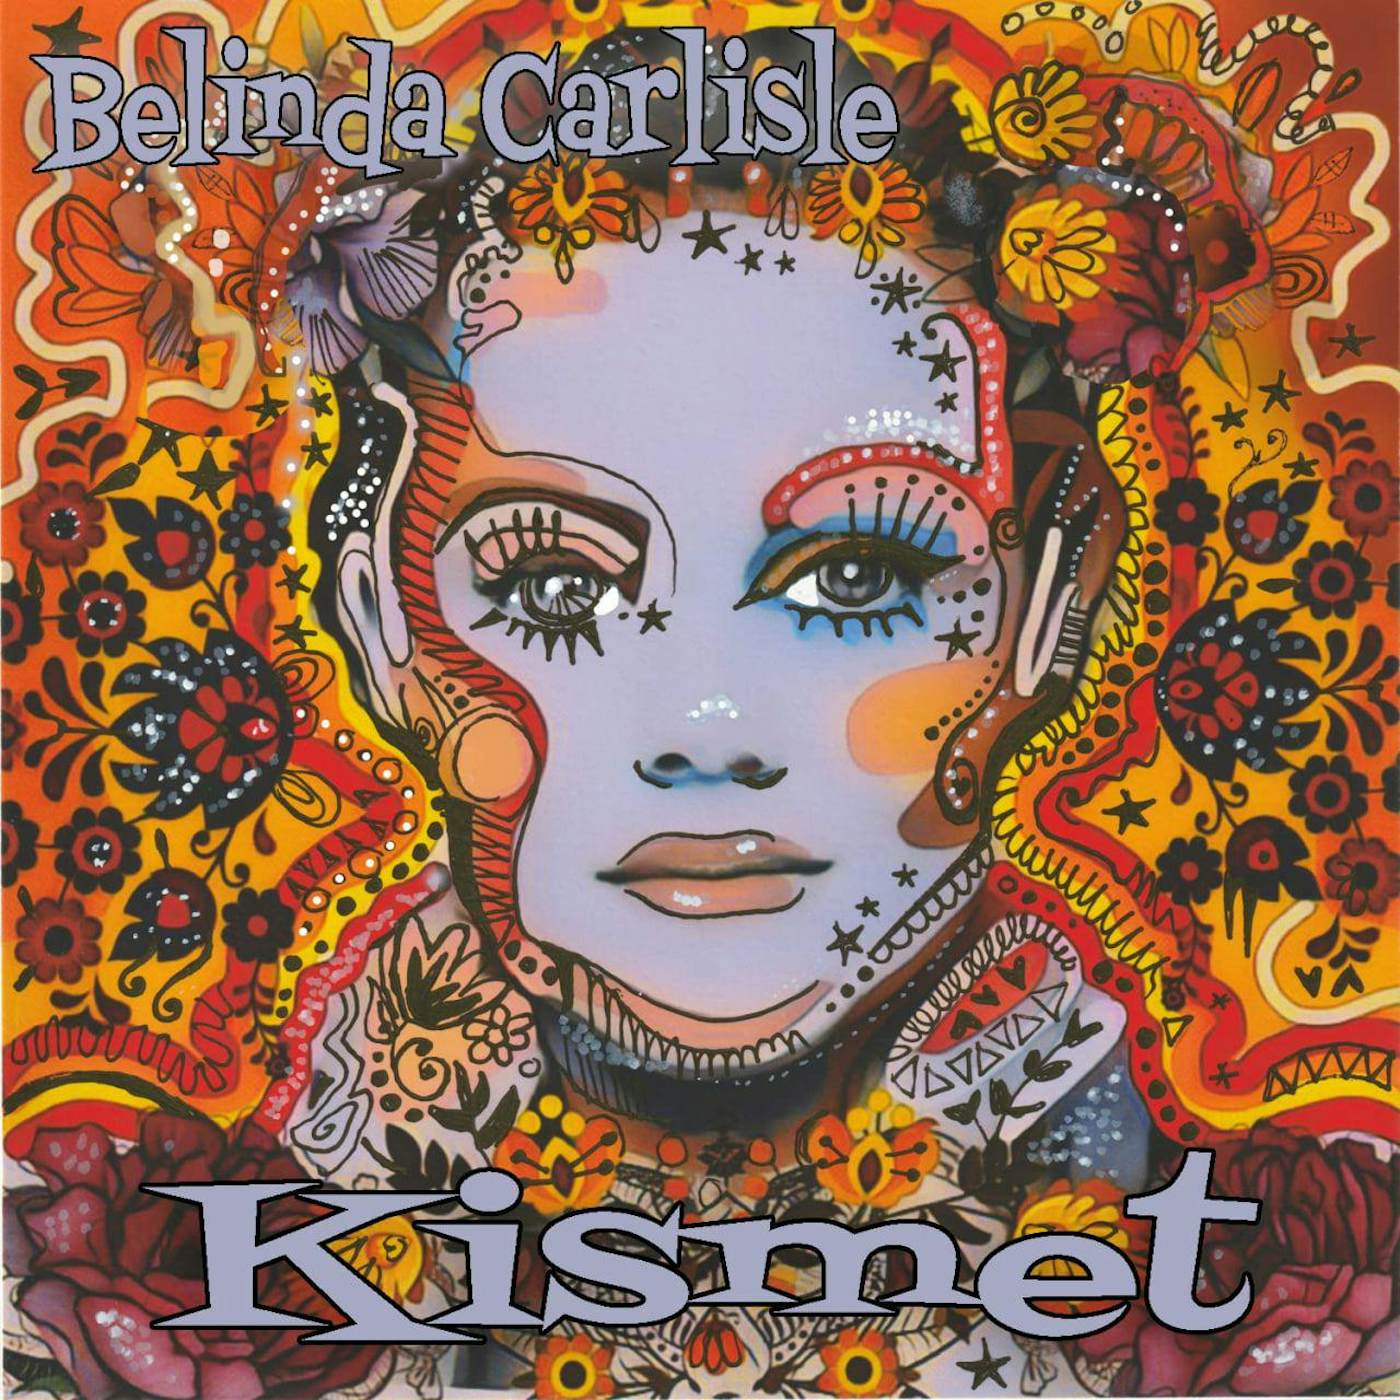 Belinda Carlisle Kismet (Orchid) Vinyl Record